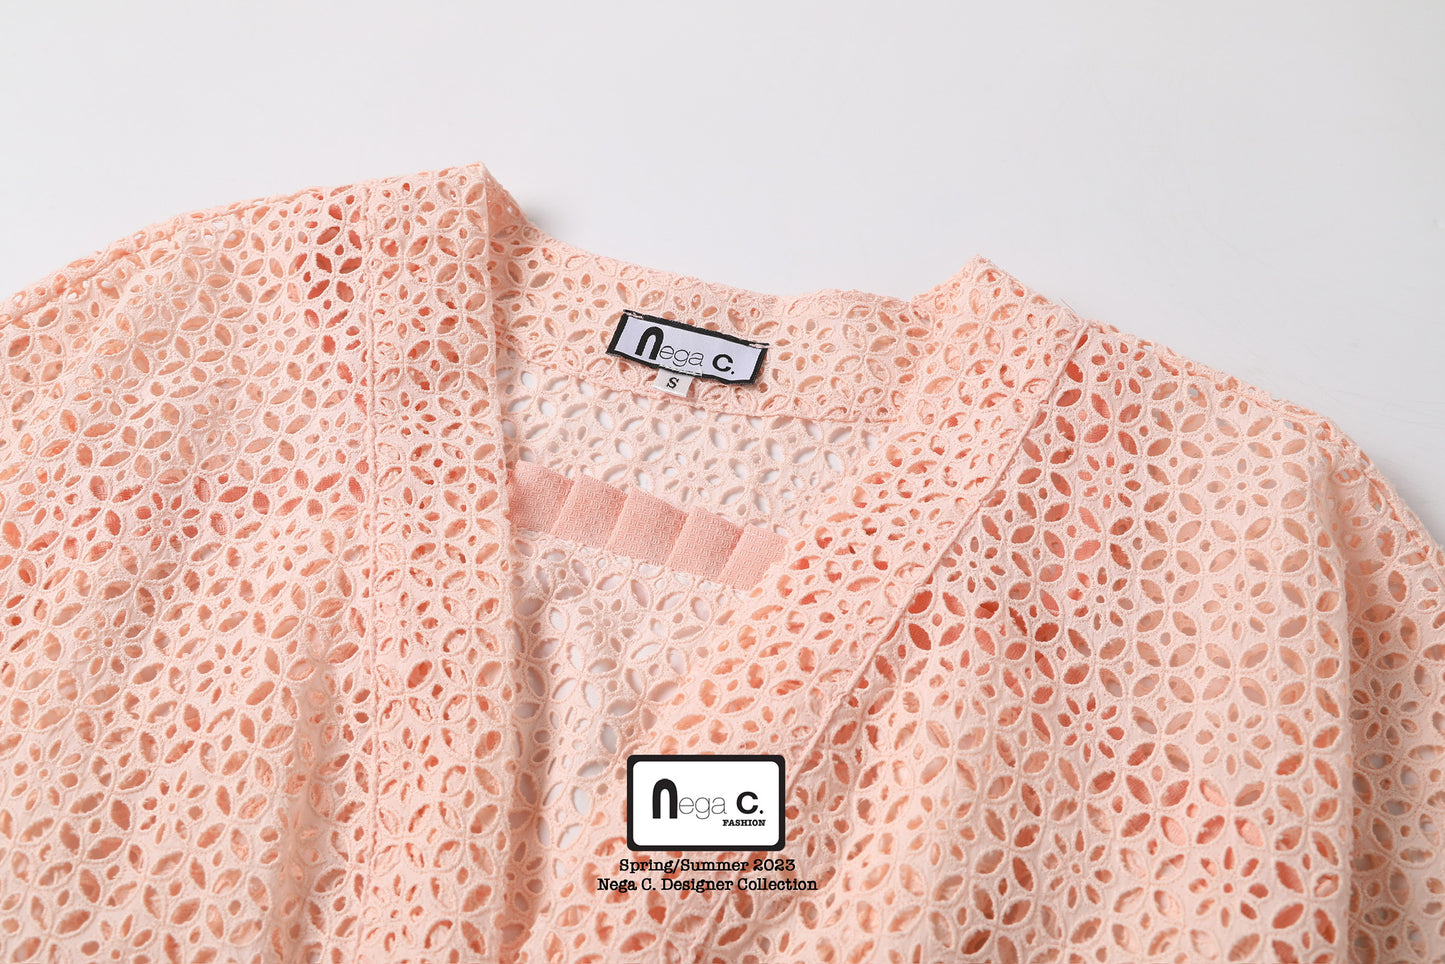 Nega C. Lace Camisole + Jacket Two-piece Set | สีชมพู | มีซับใน